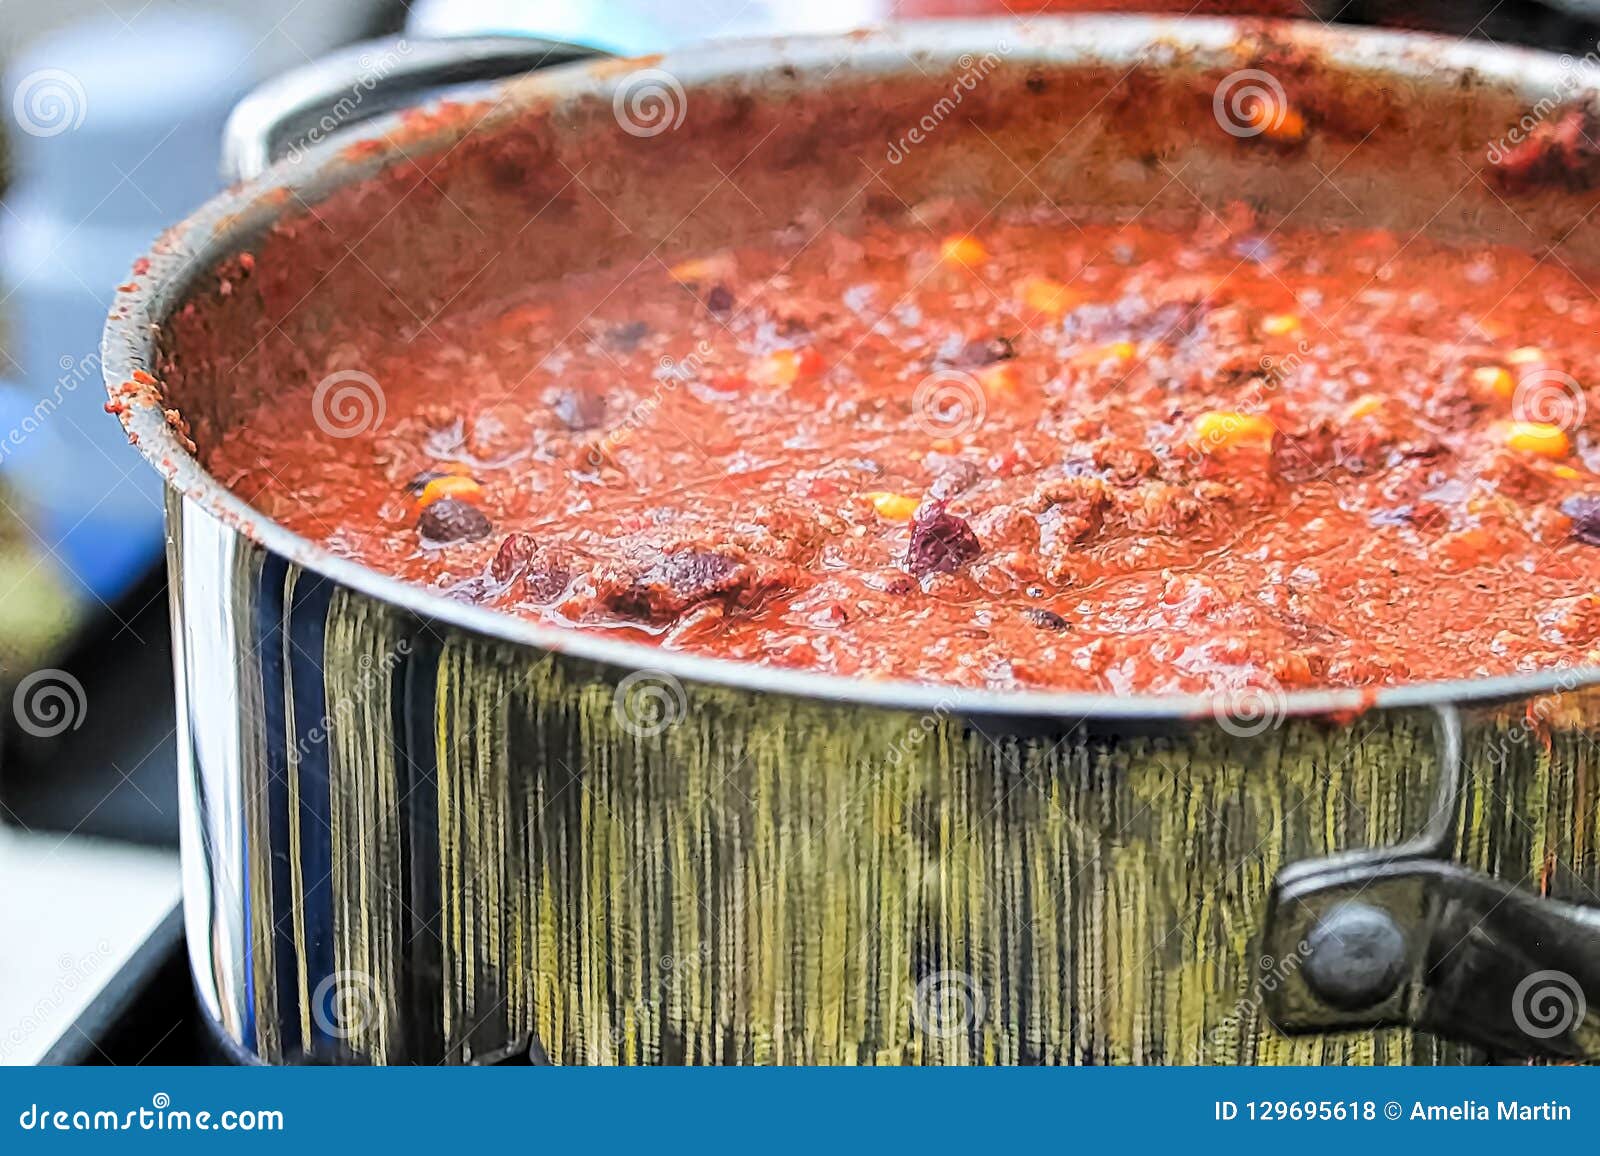 https://thumbs.dreamstime.com/z/closeup-pot-chili-cooking-129695618.jpg